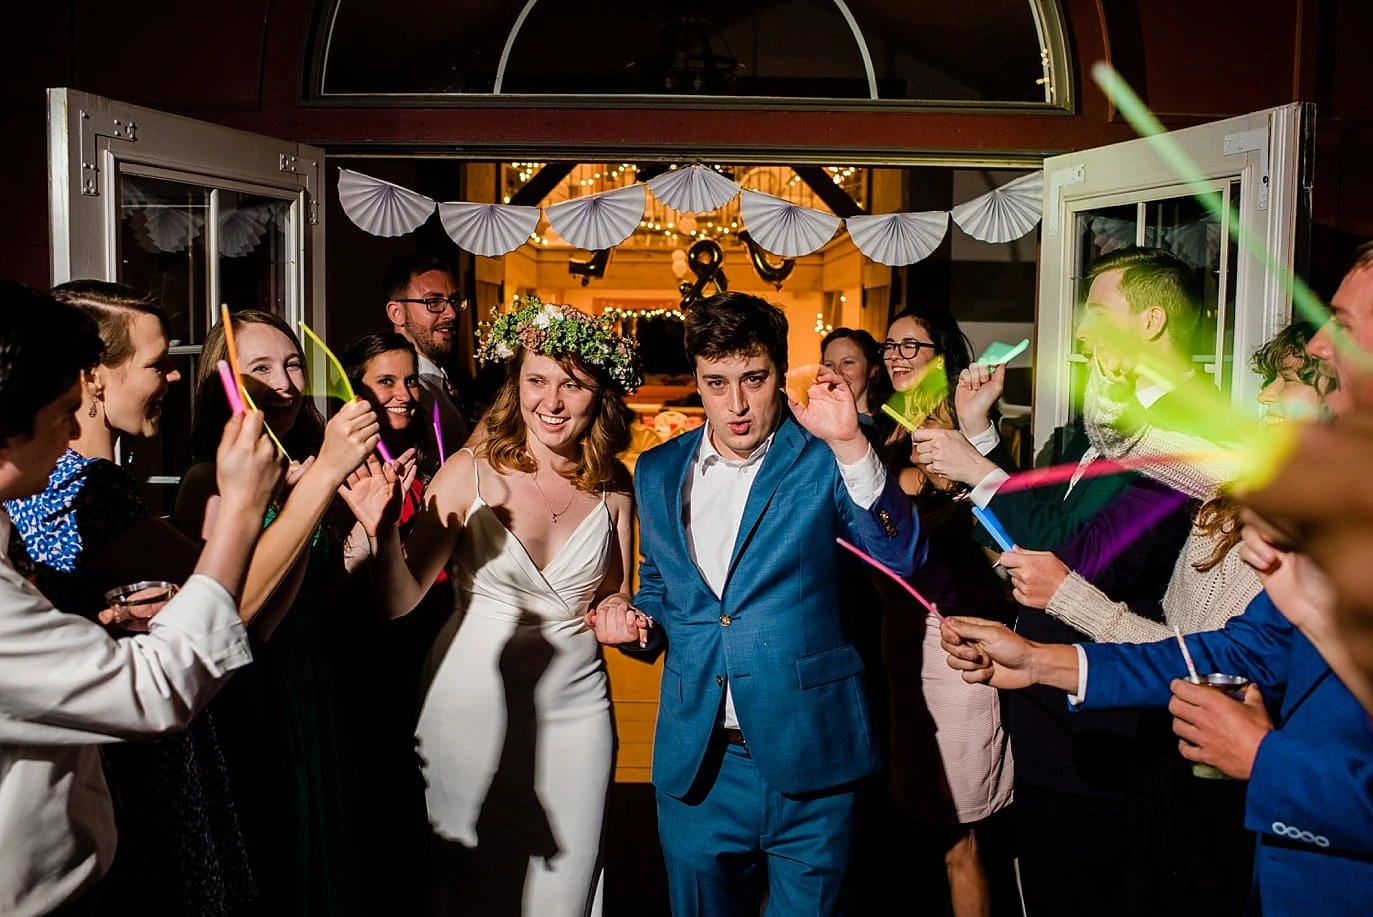 glow stick exit at wedding photo